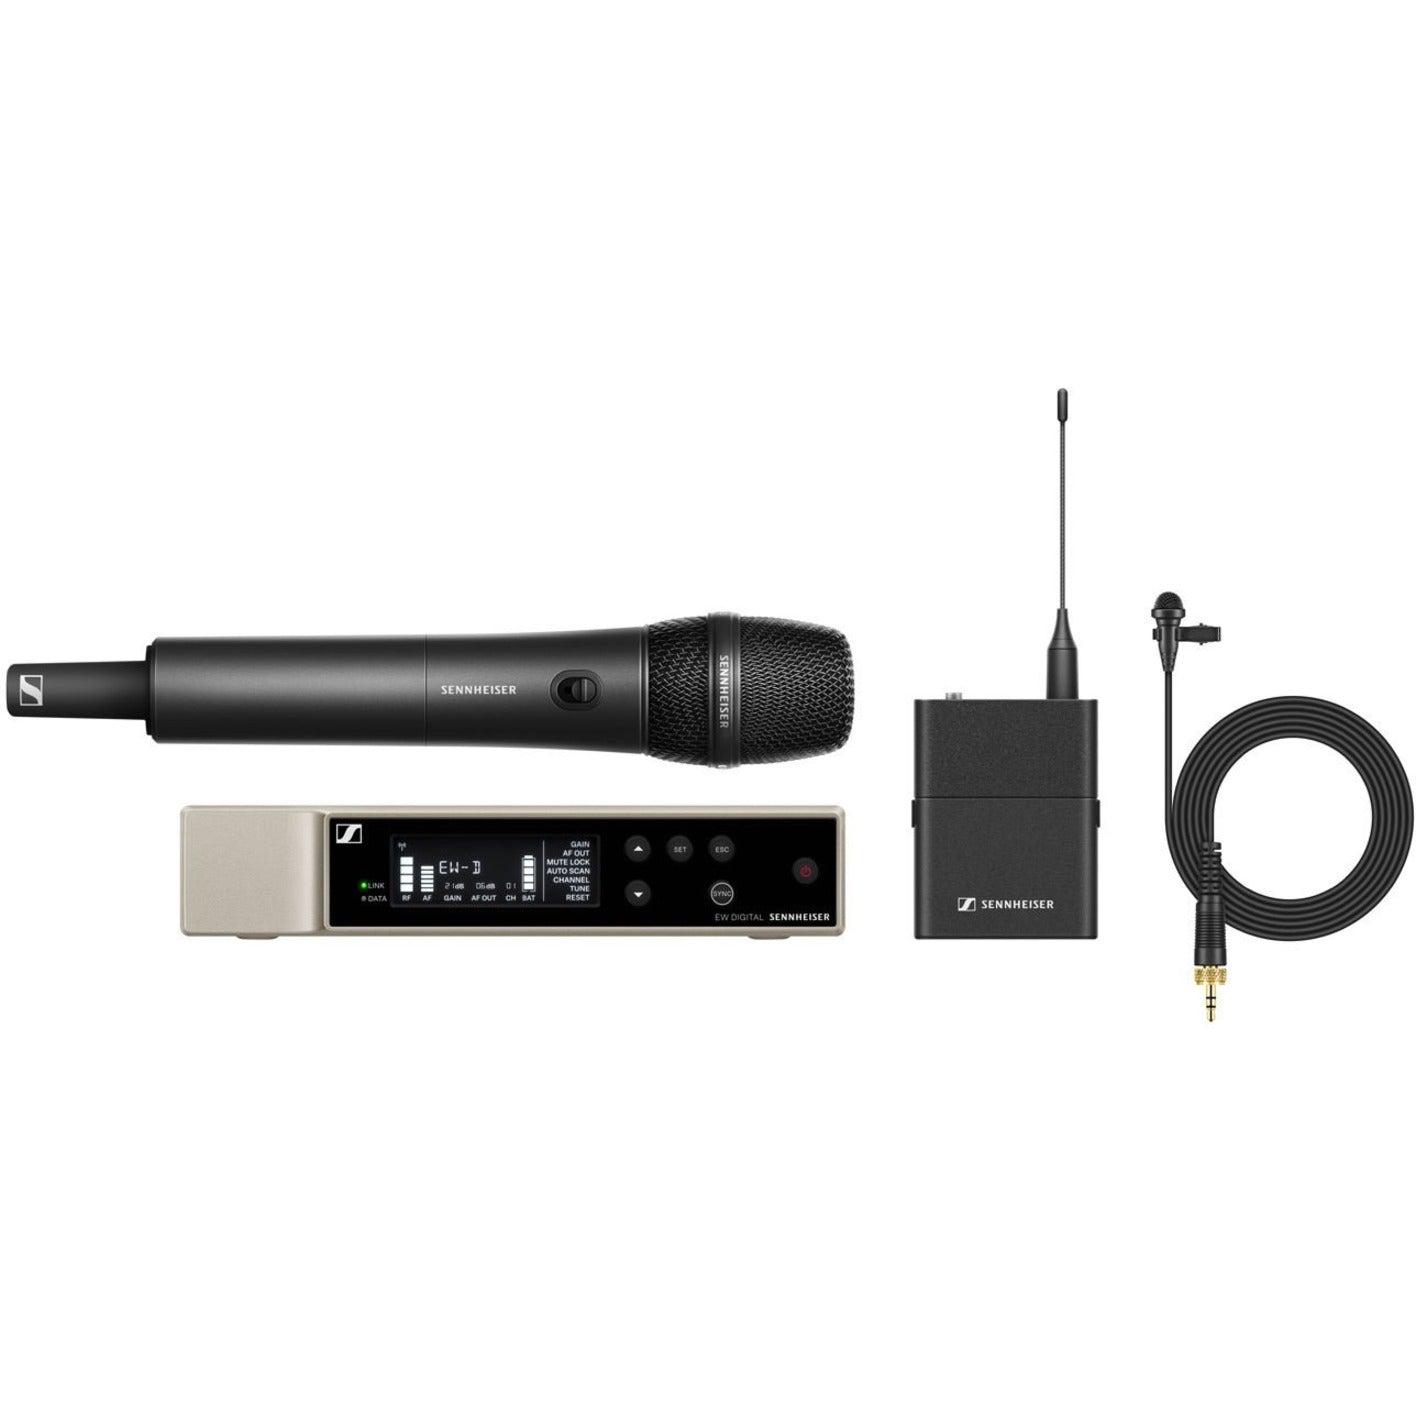 Sennheiser 508771 Wireless Microphone System, Includes EM Rack Receiver, Bodypack Transmitter, Handheld Transmitter, Lavalier Microphone, and More